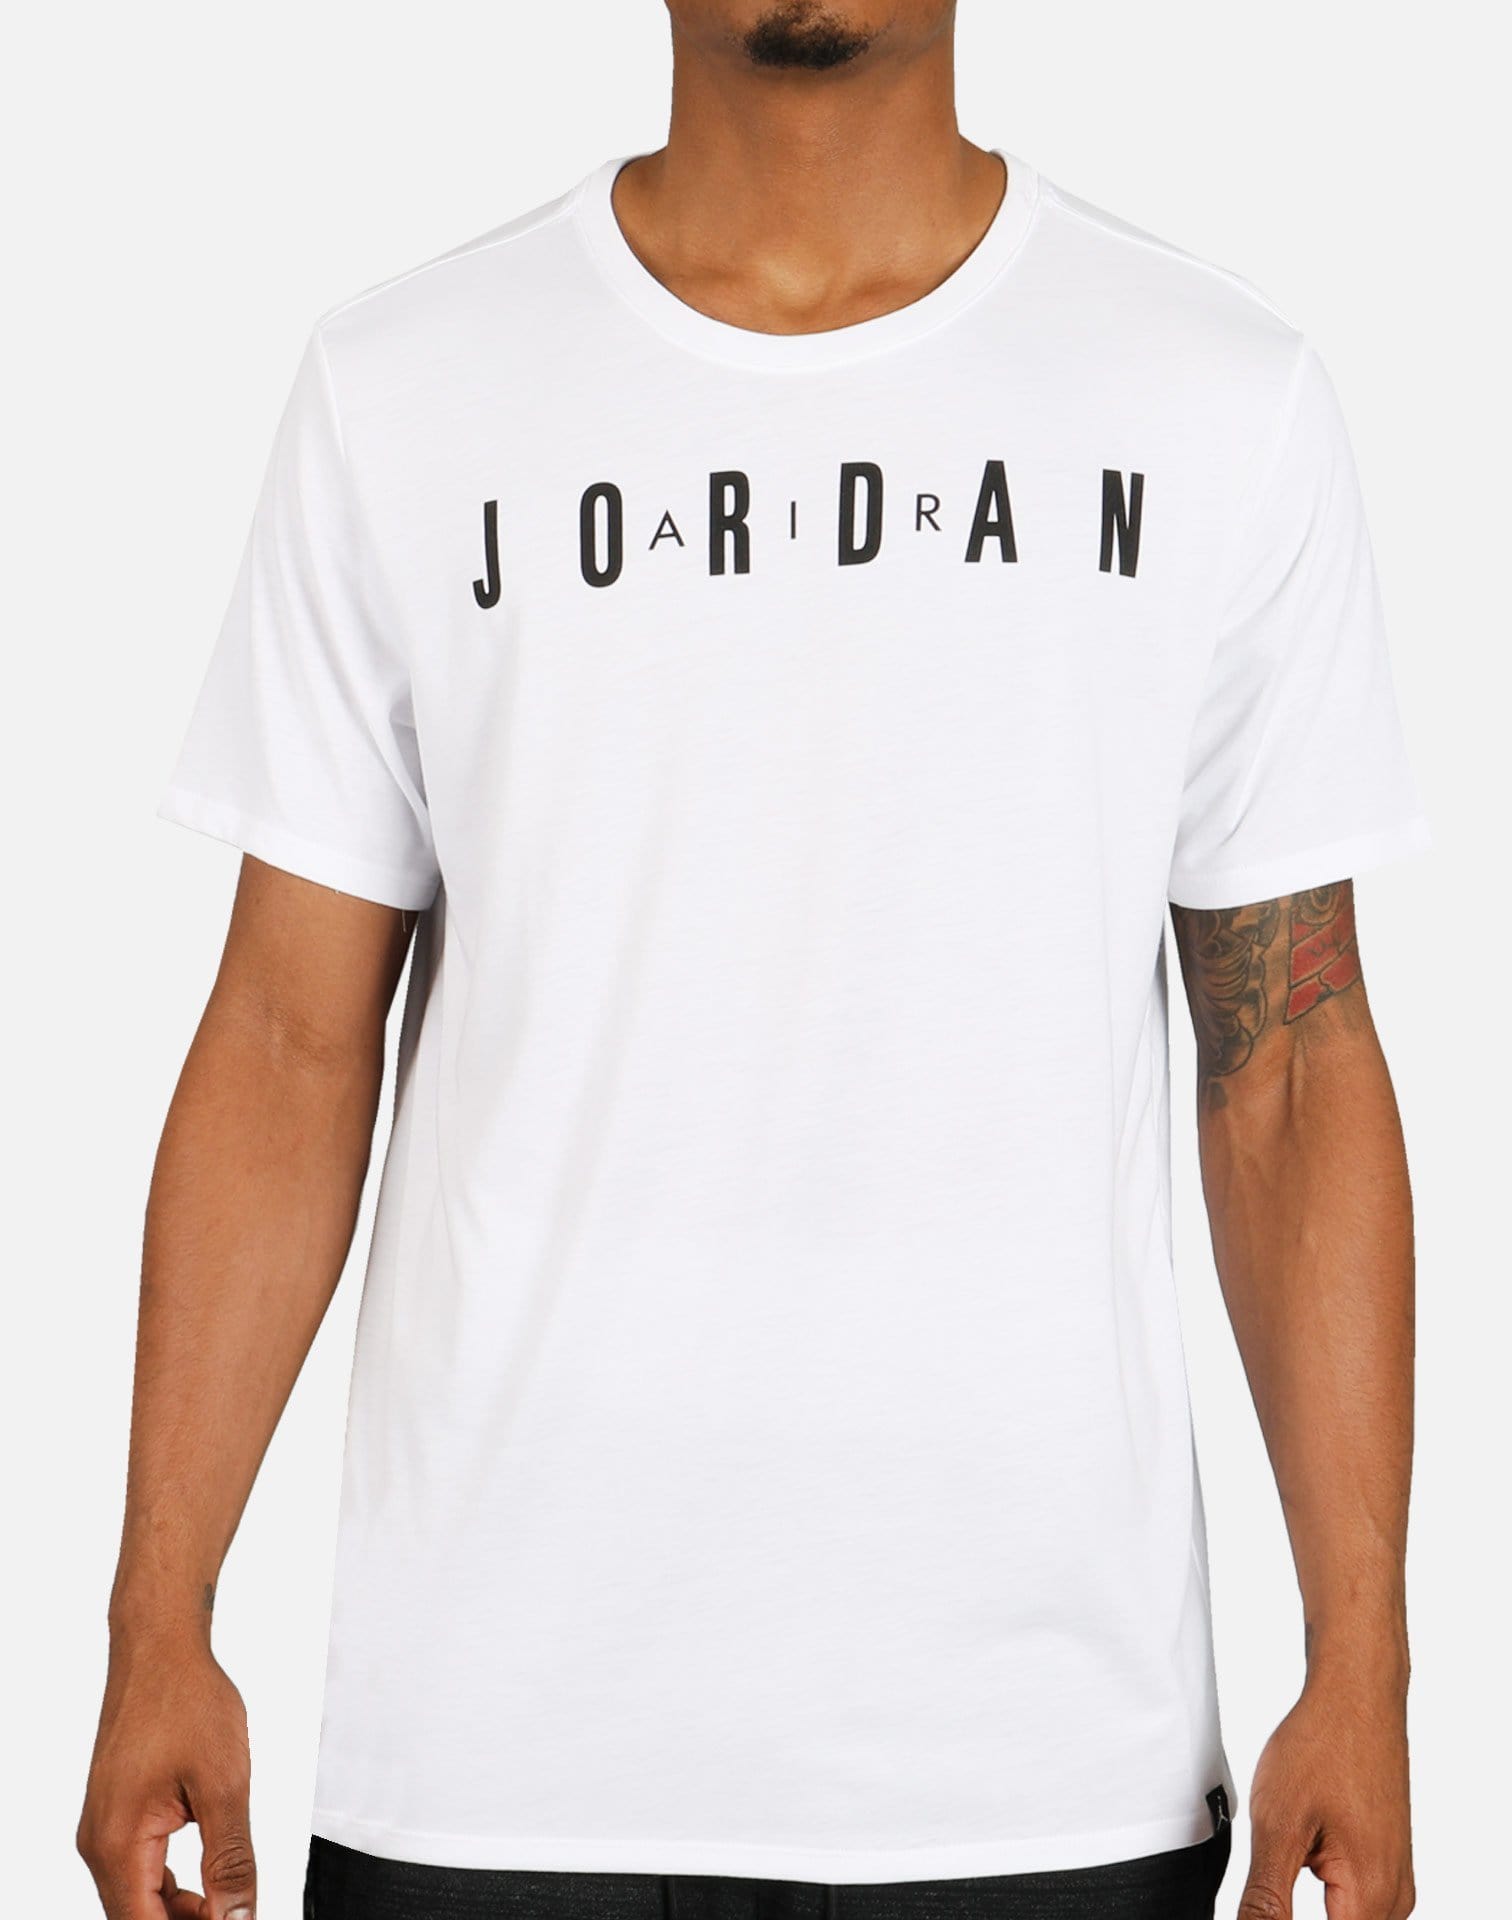 Jordan Iconic Air Jordan Tee (White/Black)